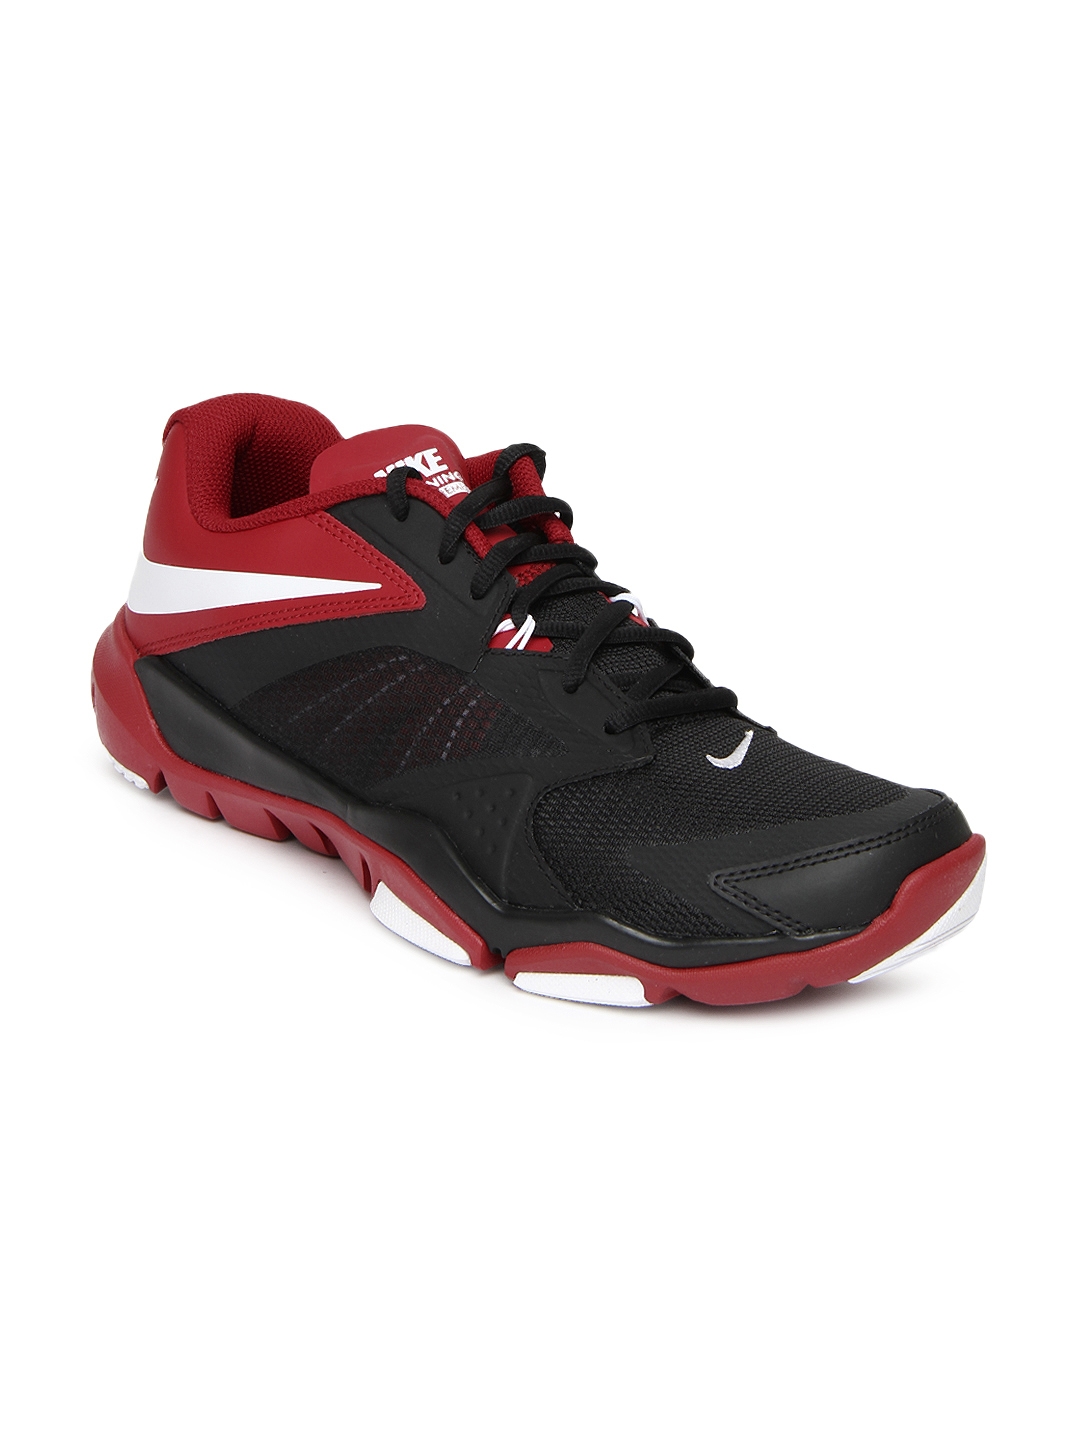 Flex Supreme Tr 3 Training Sports Shoes